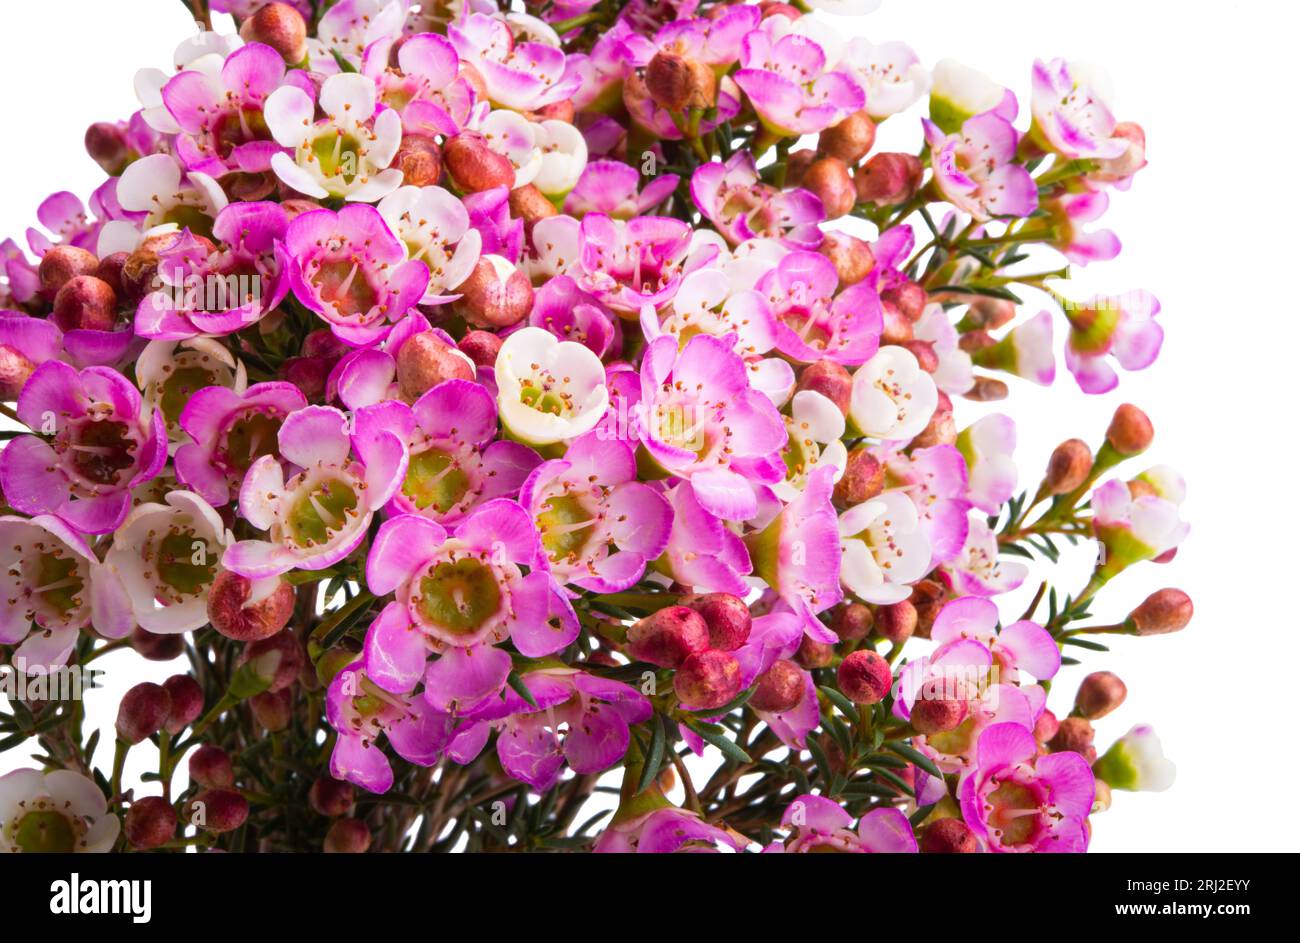 myrtle flowers isolated on white background Stock Photo